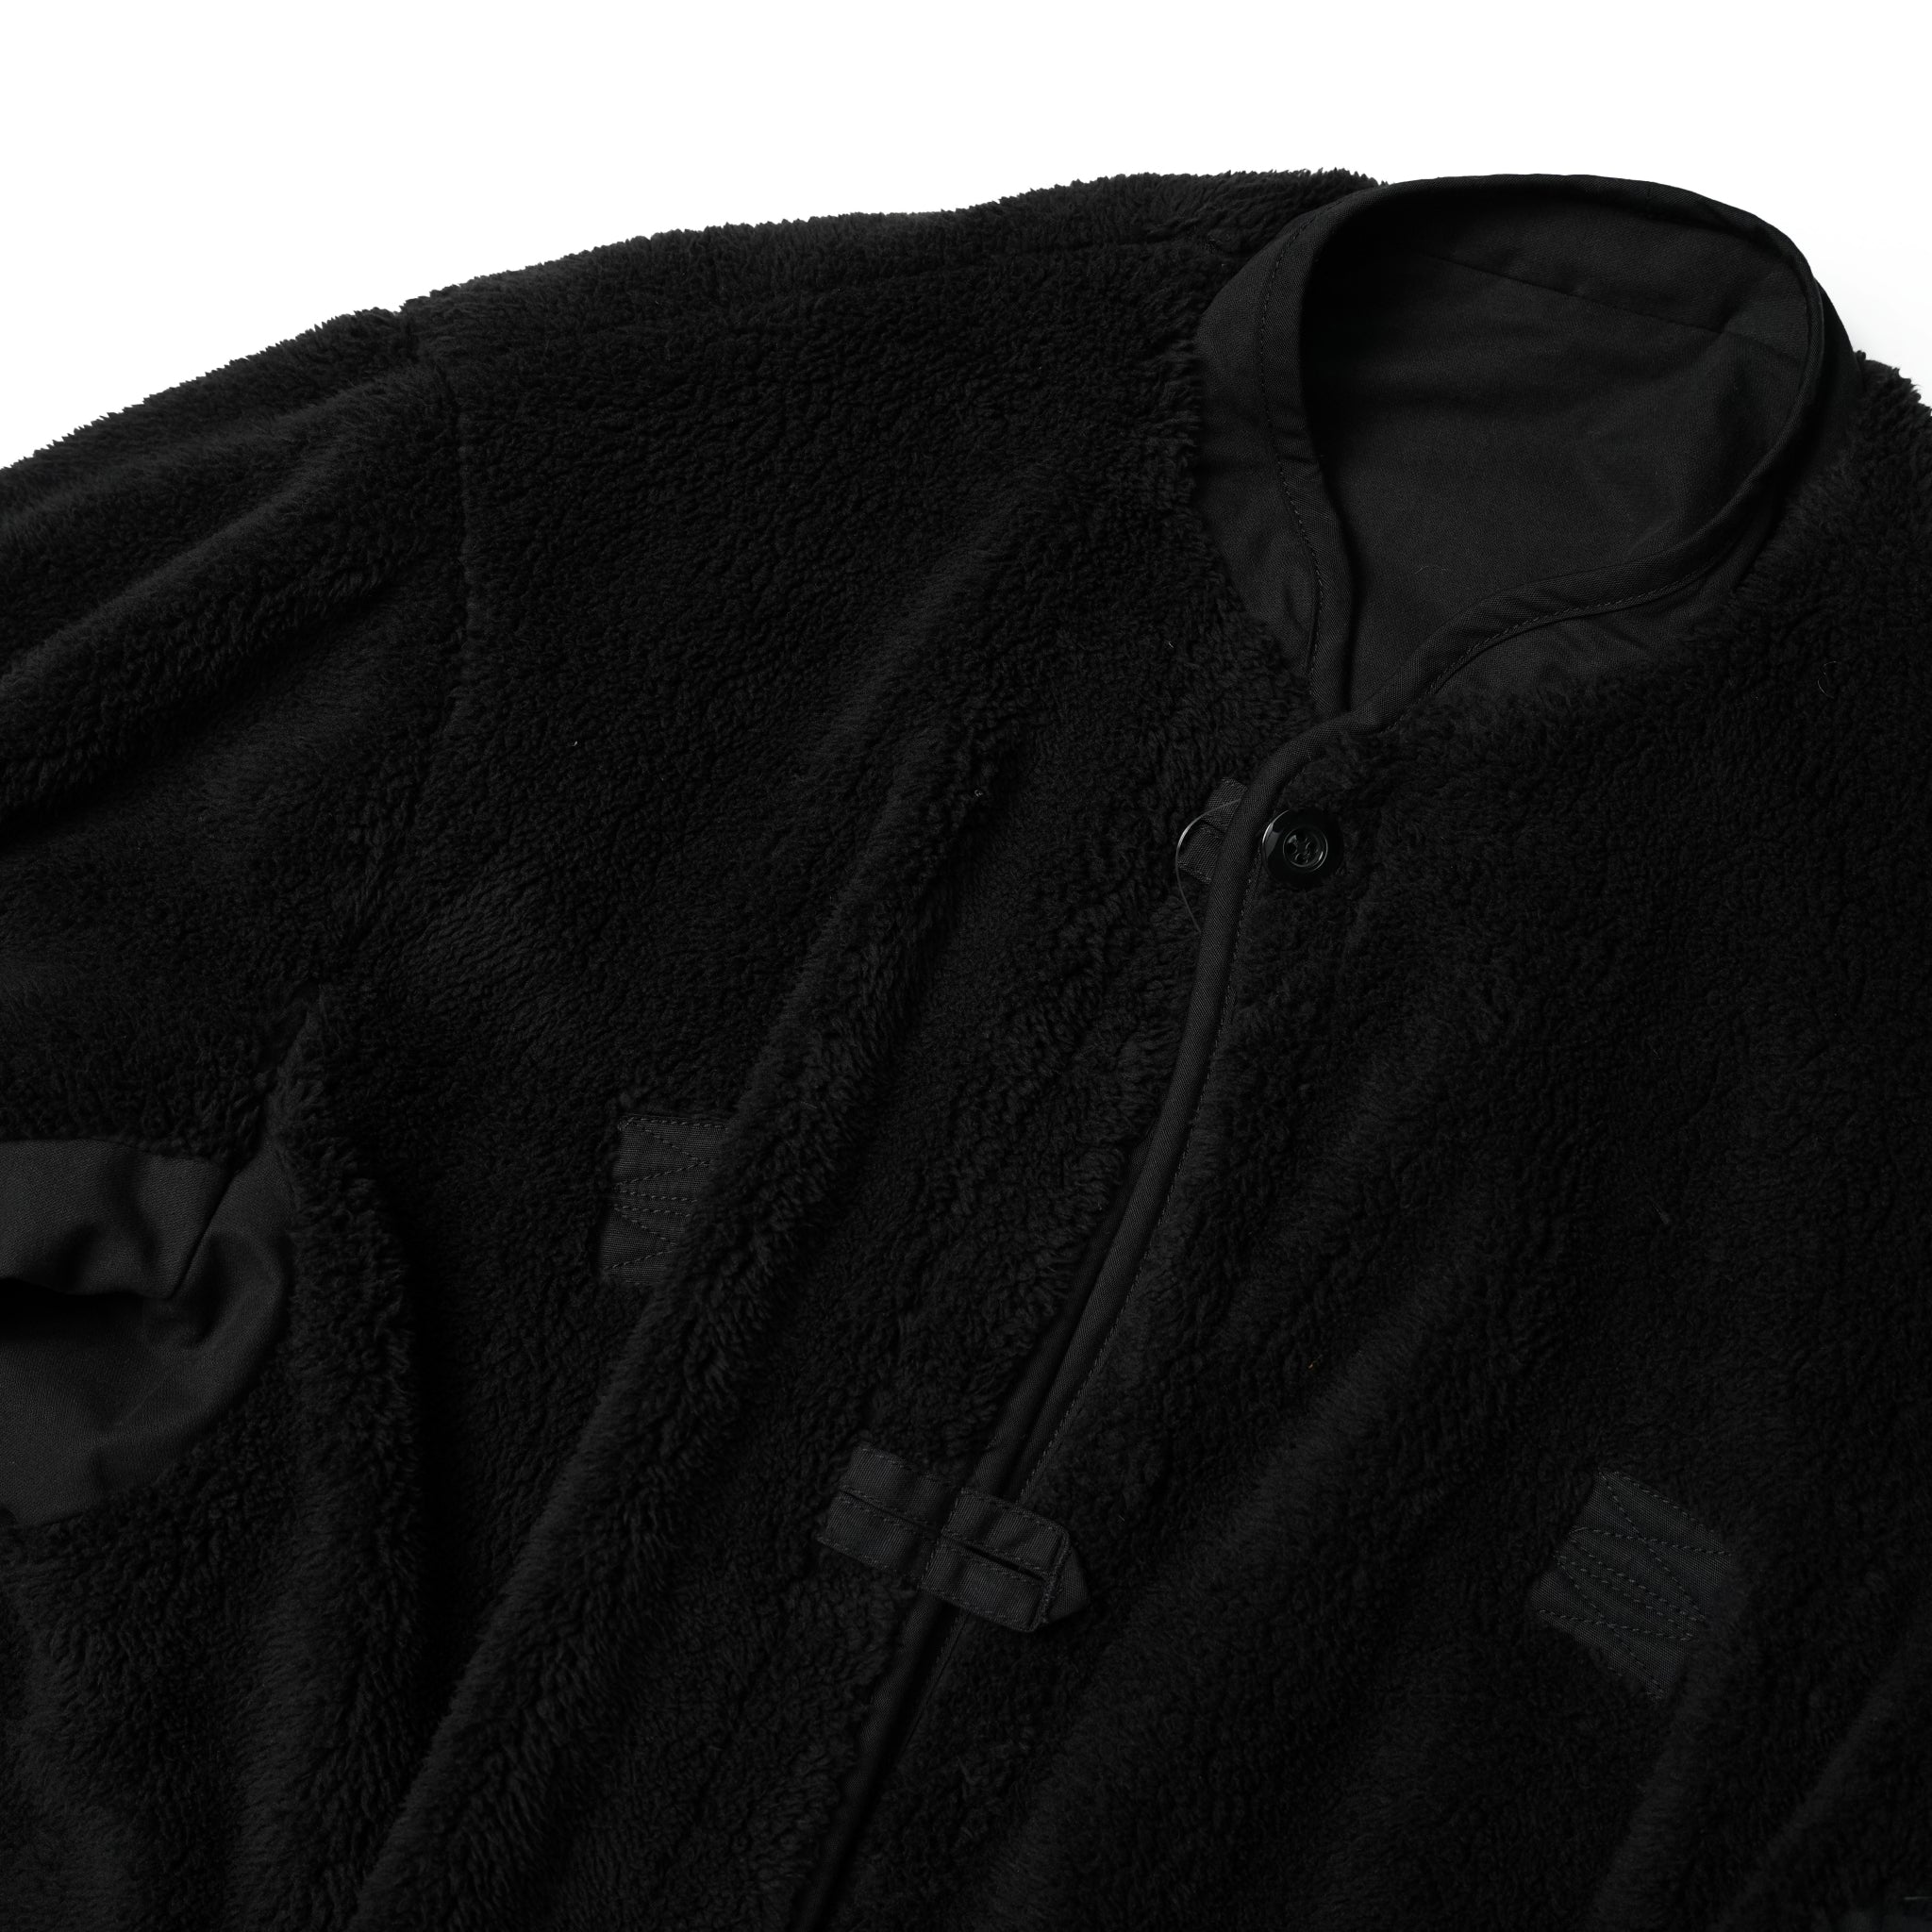 No:AM-2354013 | Name:Broken Twill Reversible Coat | Color:Khaki/Black【ARMYTWILL_アーミーツイル】